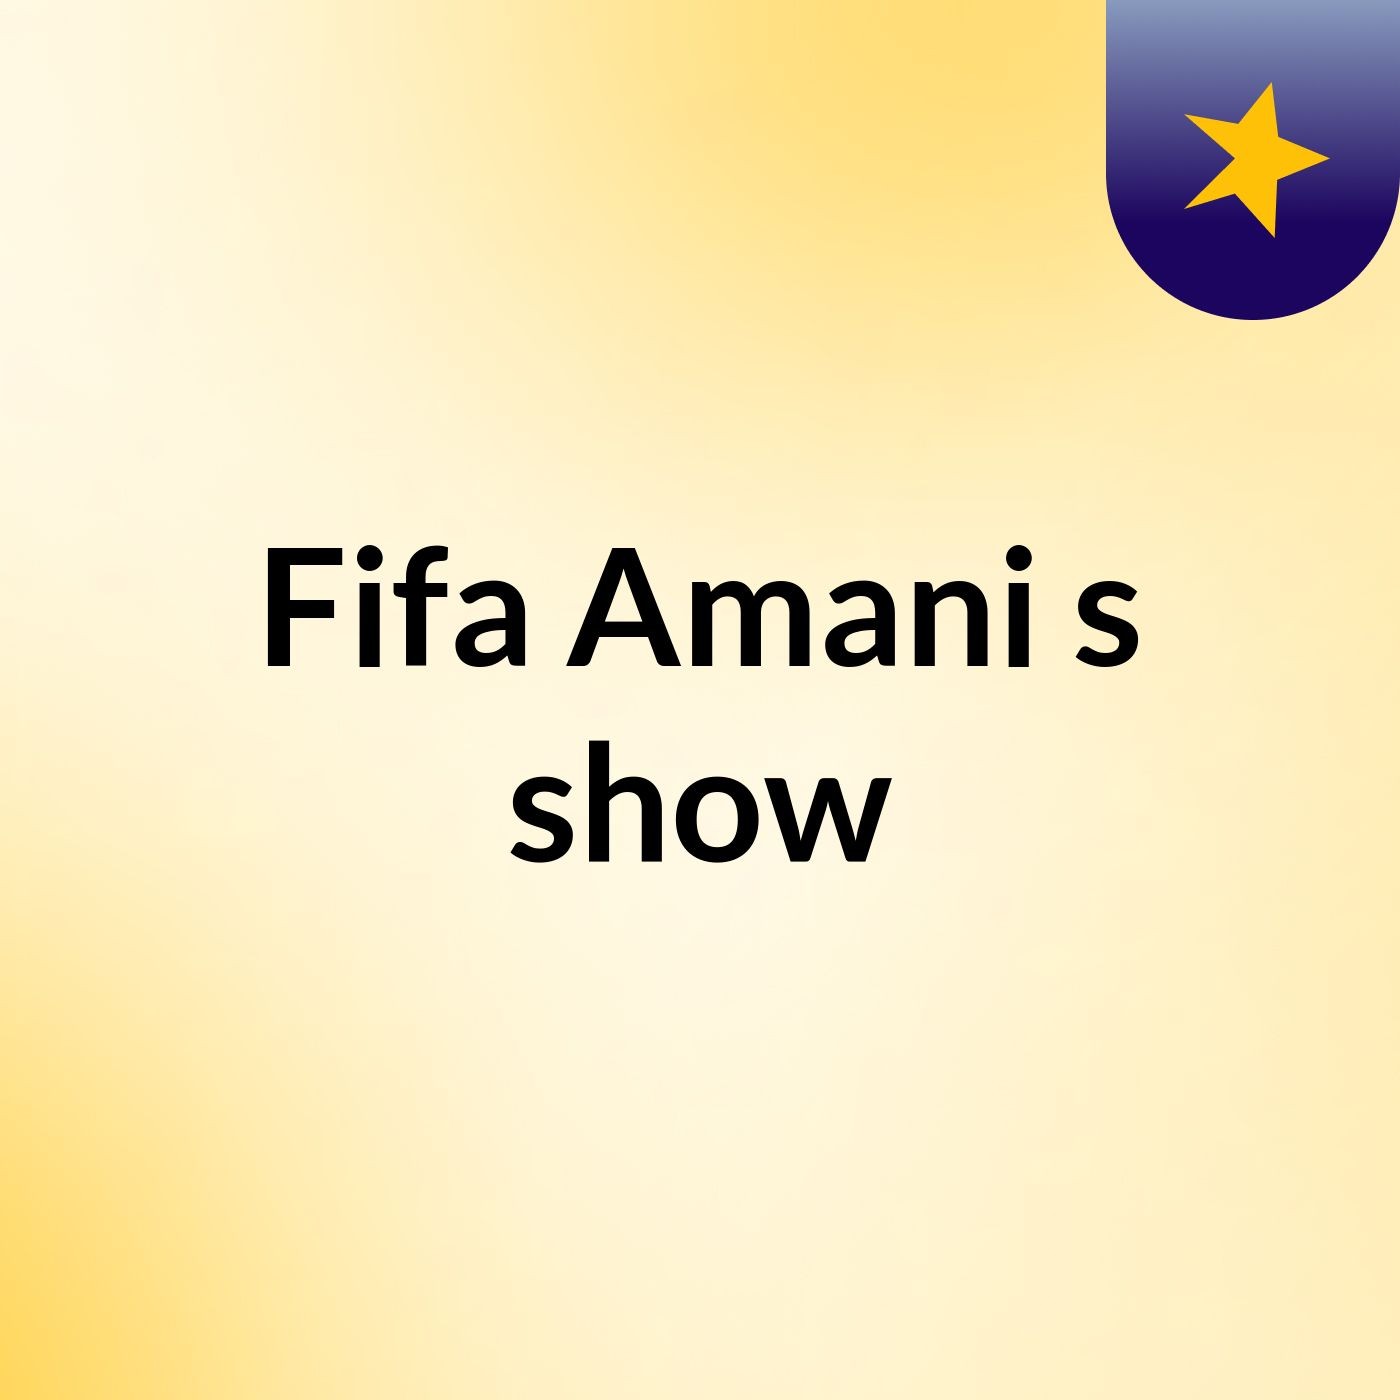 Fifa Amani's show